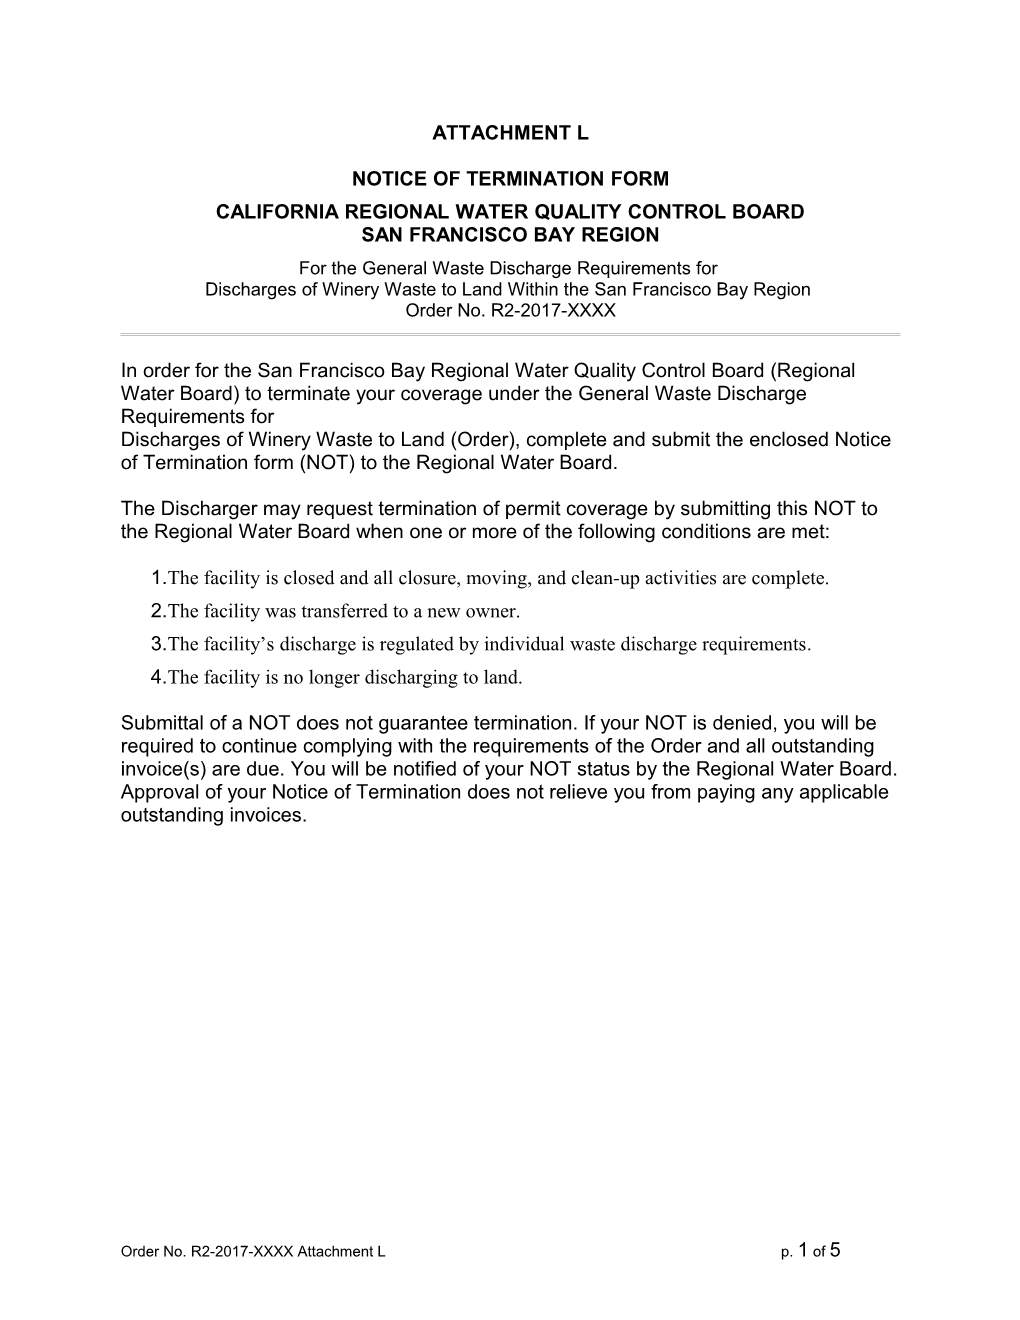 California Regional Water Quality Control Board s28